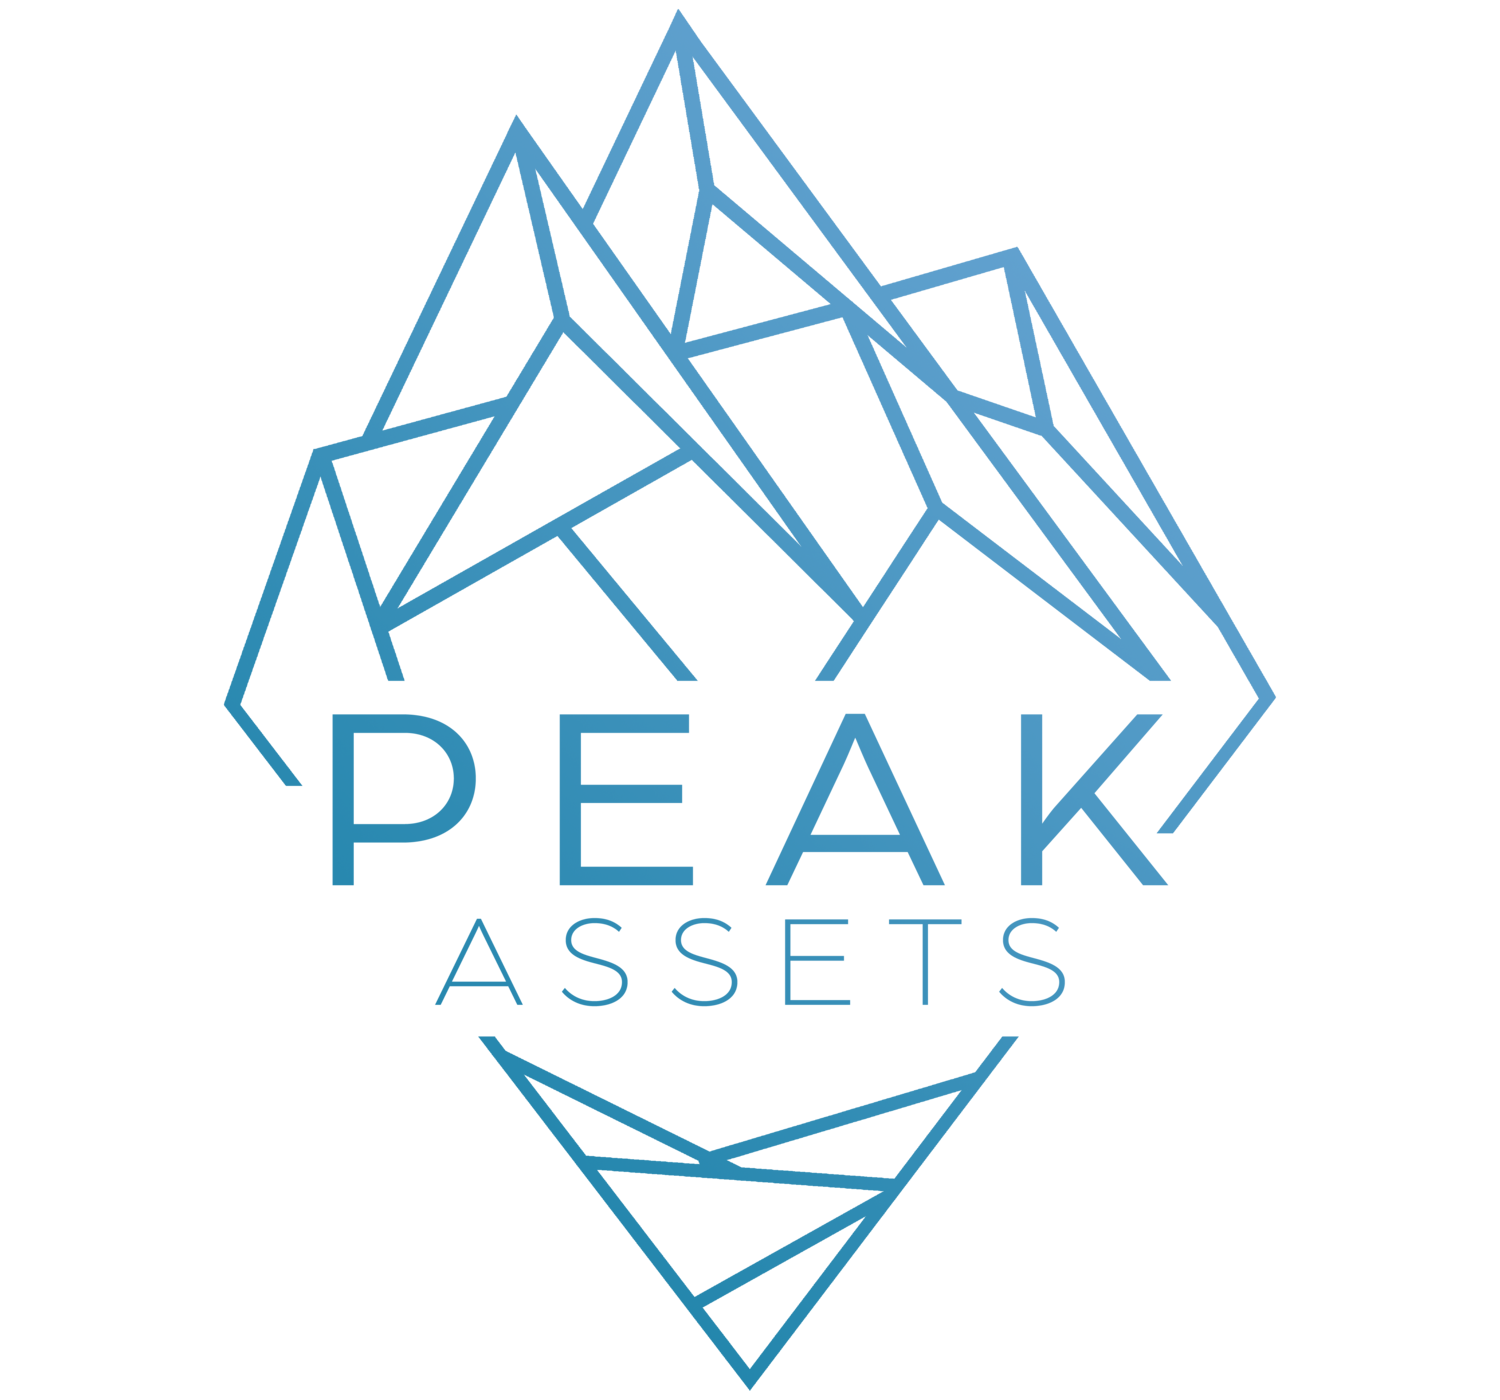 Peak Assets